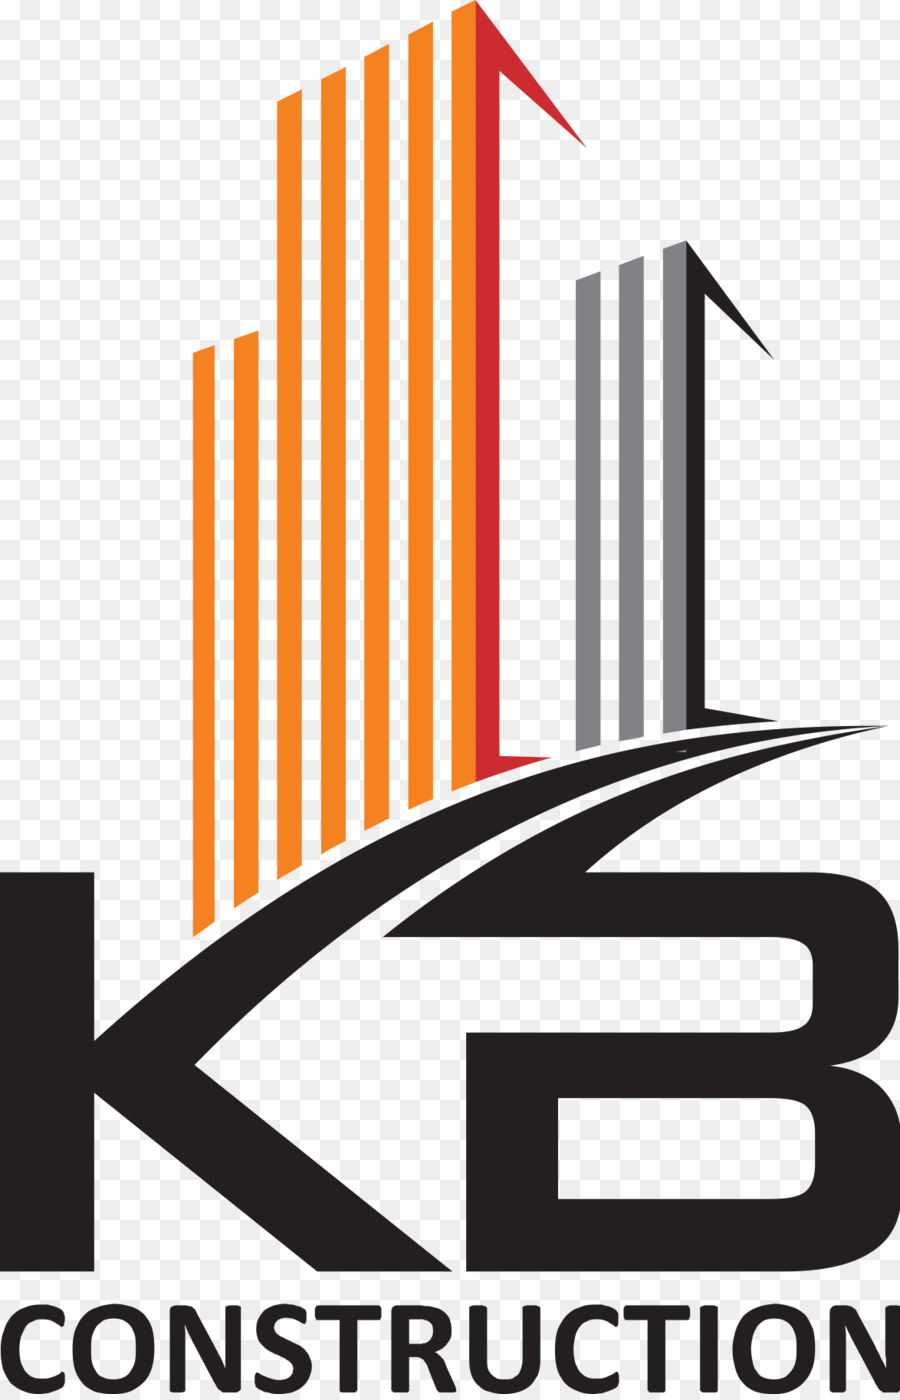 Logo Graphic design, ingegneria edile-Architettura - costruzione